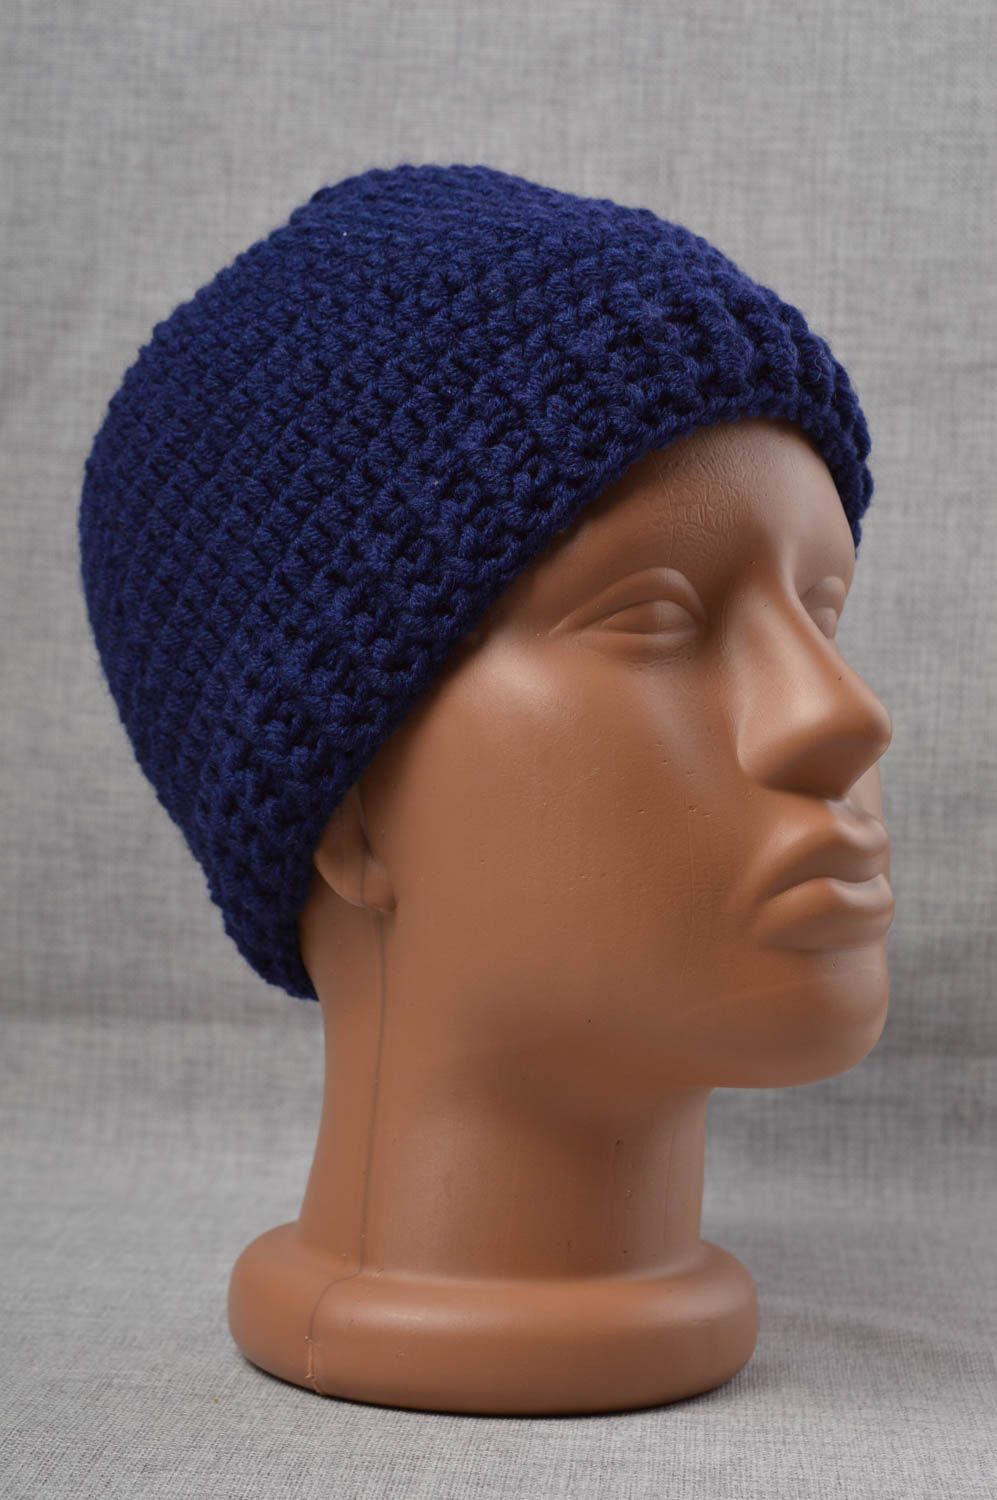 Unusual handmade crochet winter hat warm hat for kids accessories for girls photo 1